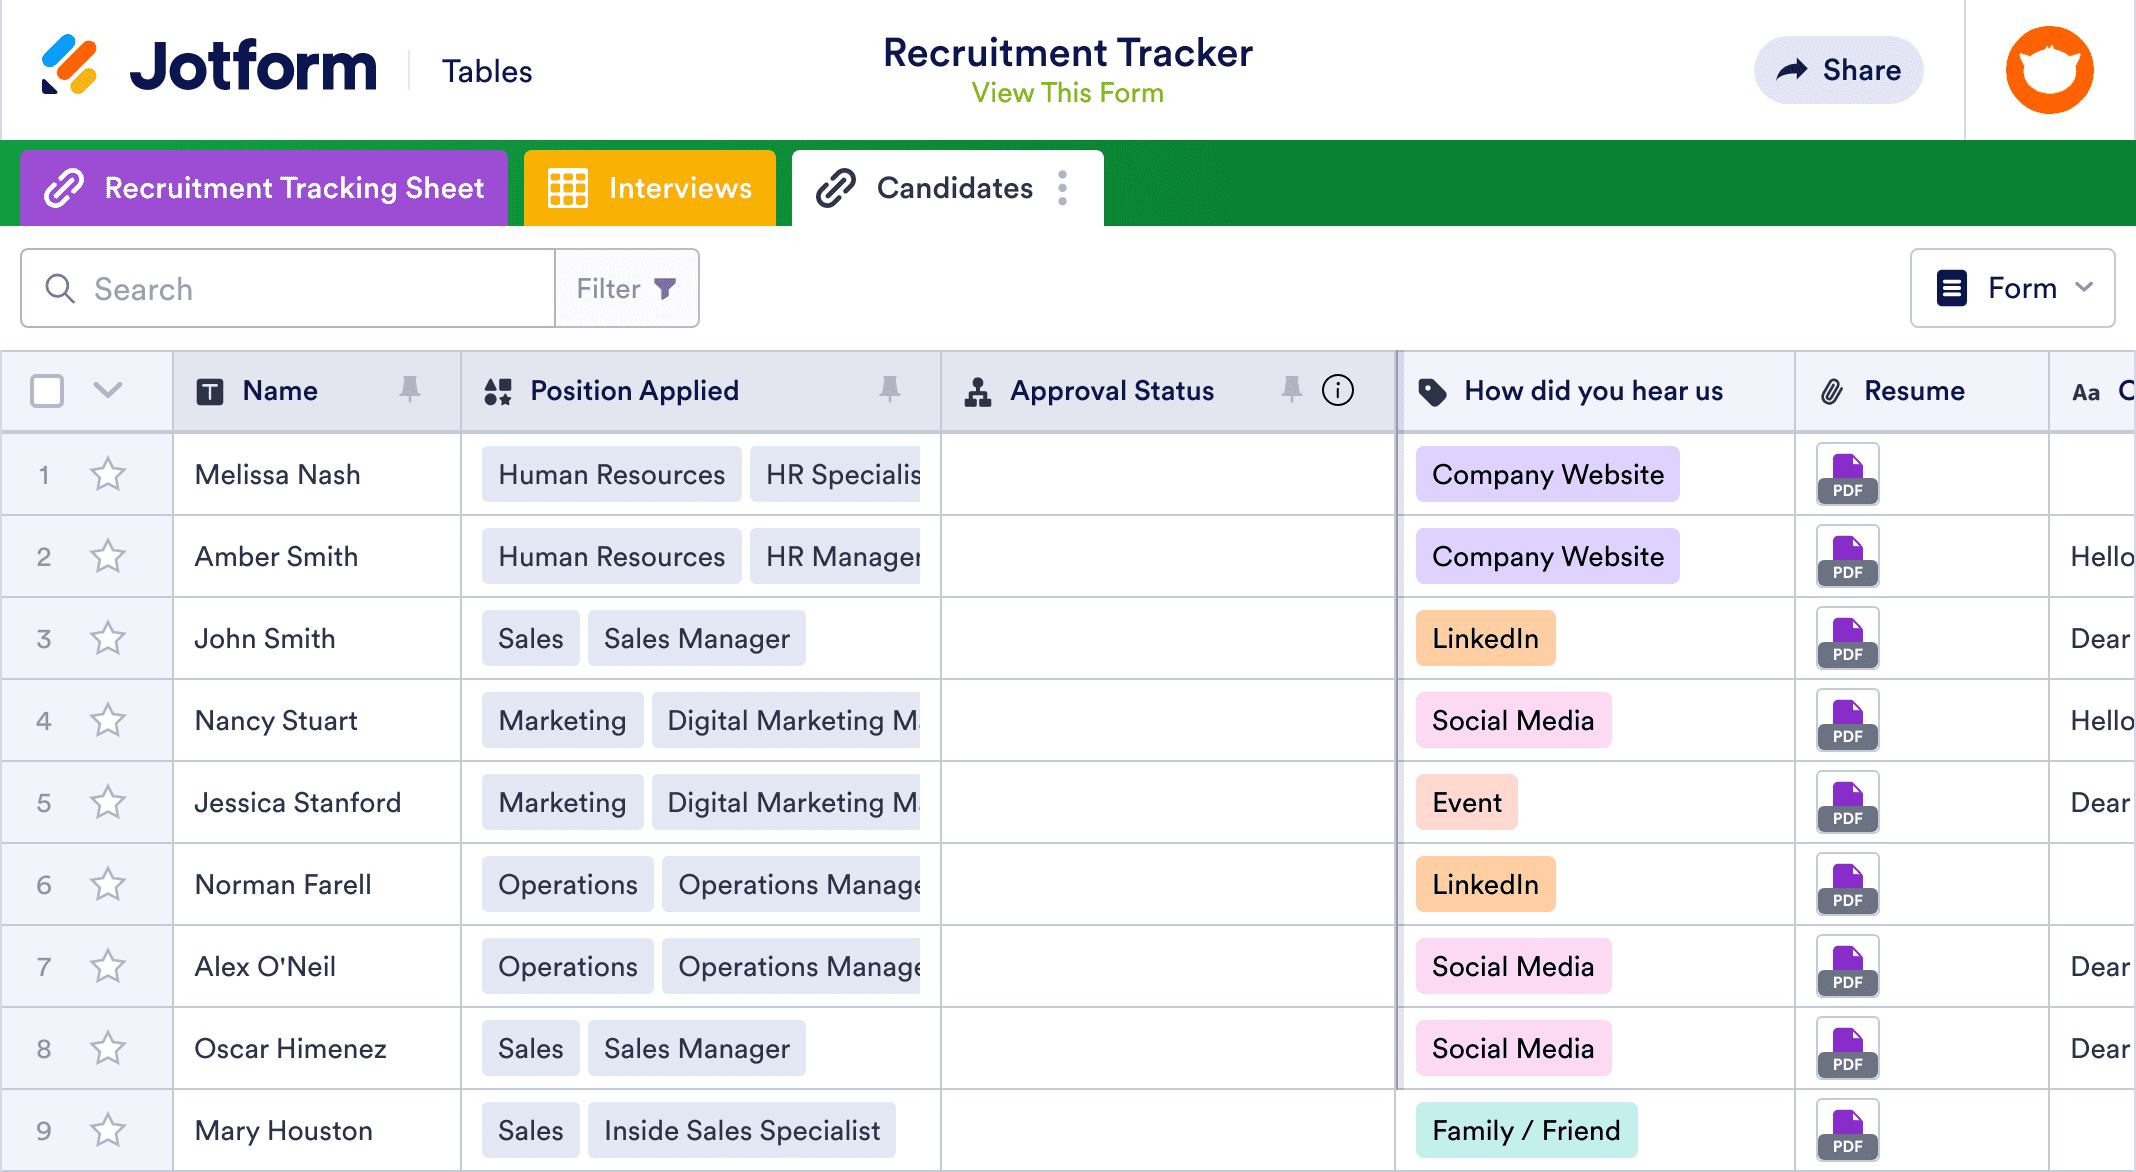 Recruitment Tracker Template | Jotform Tables